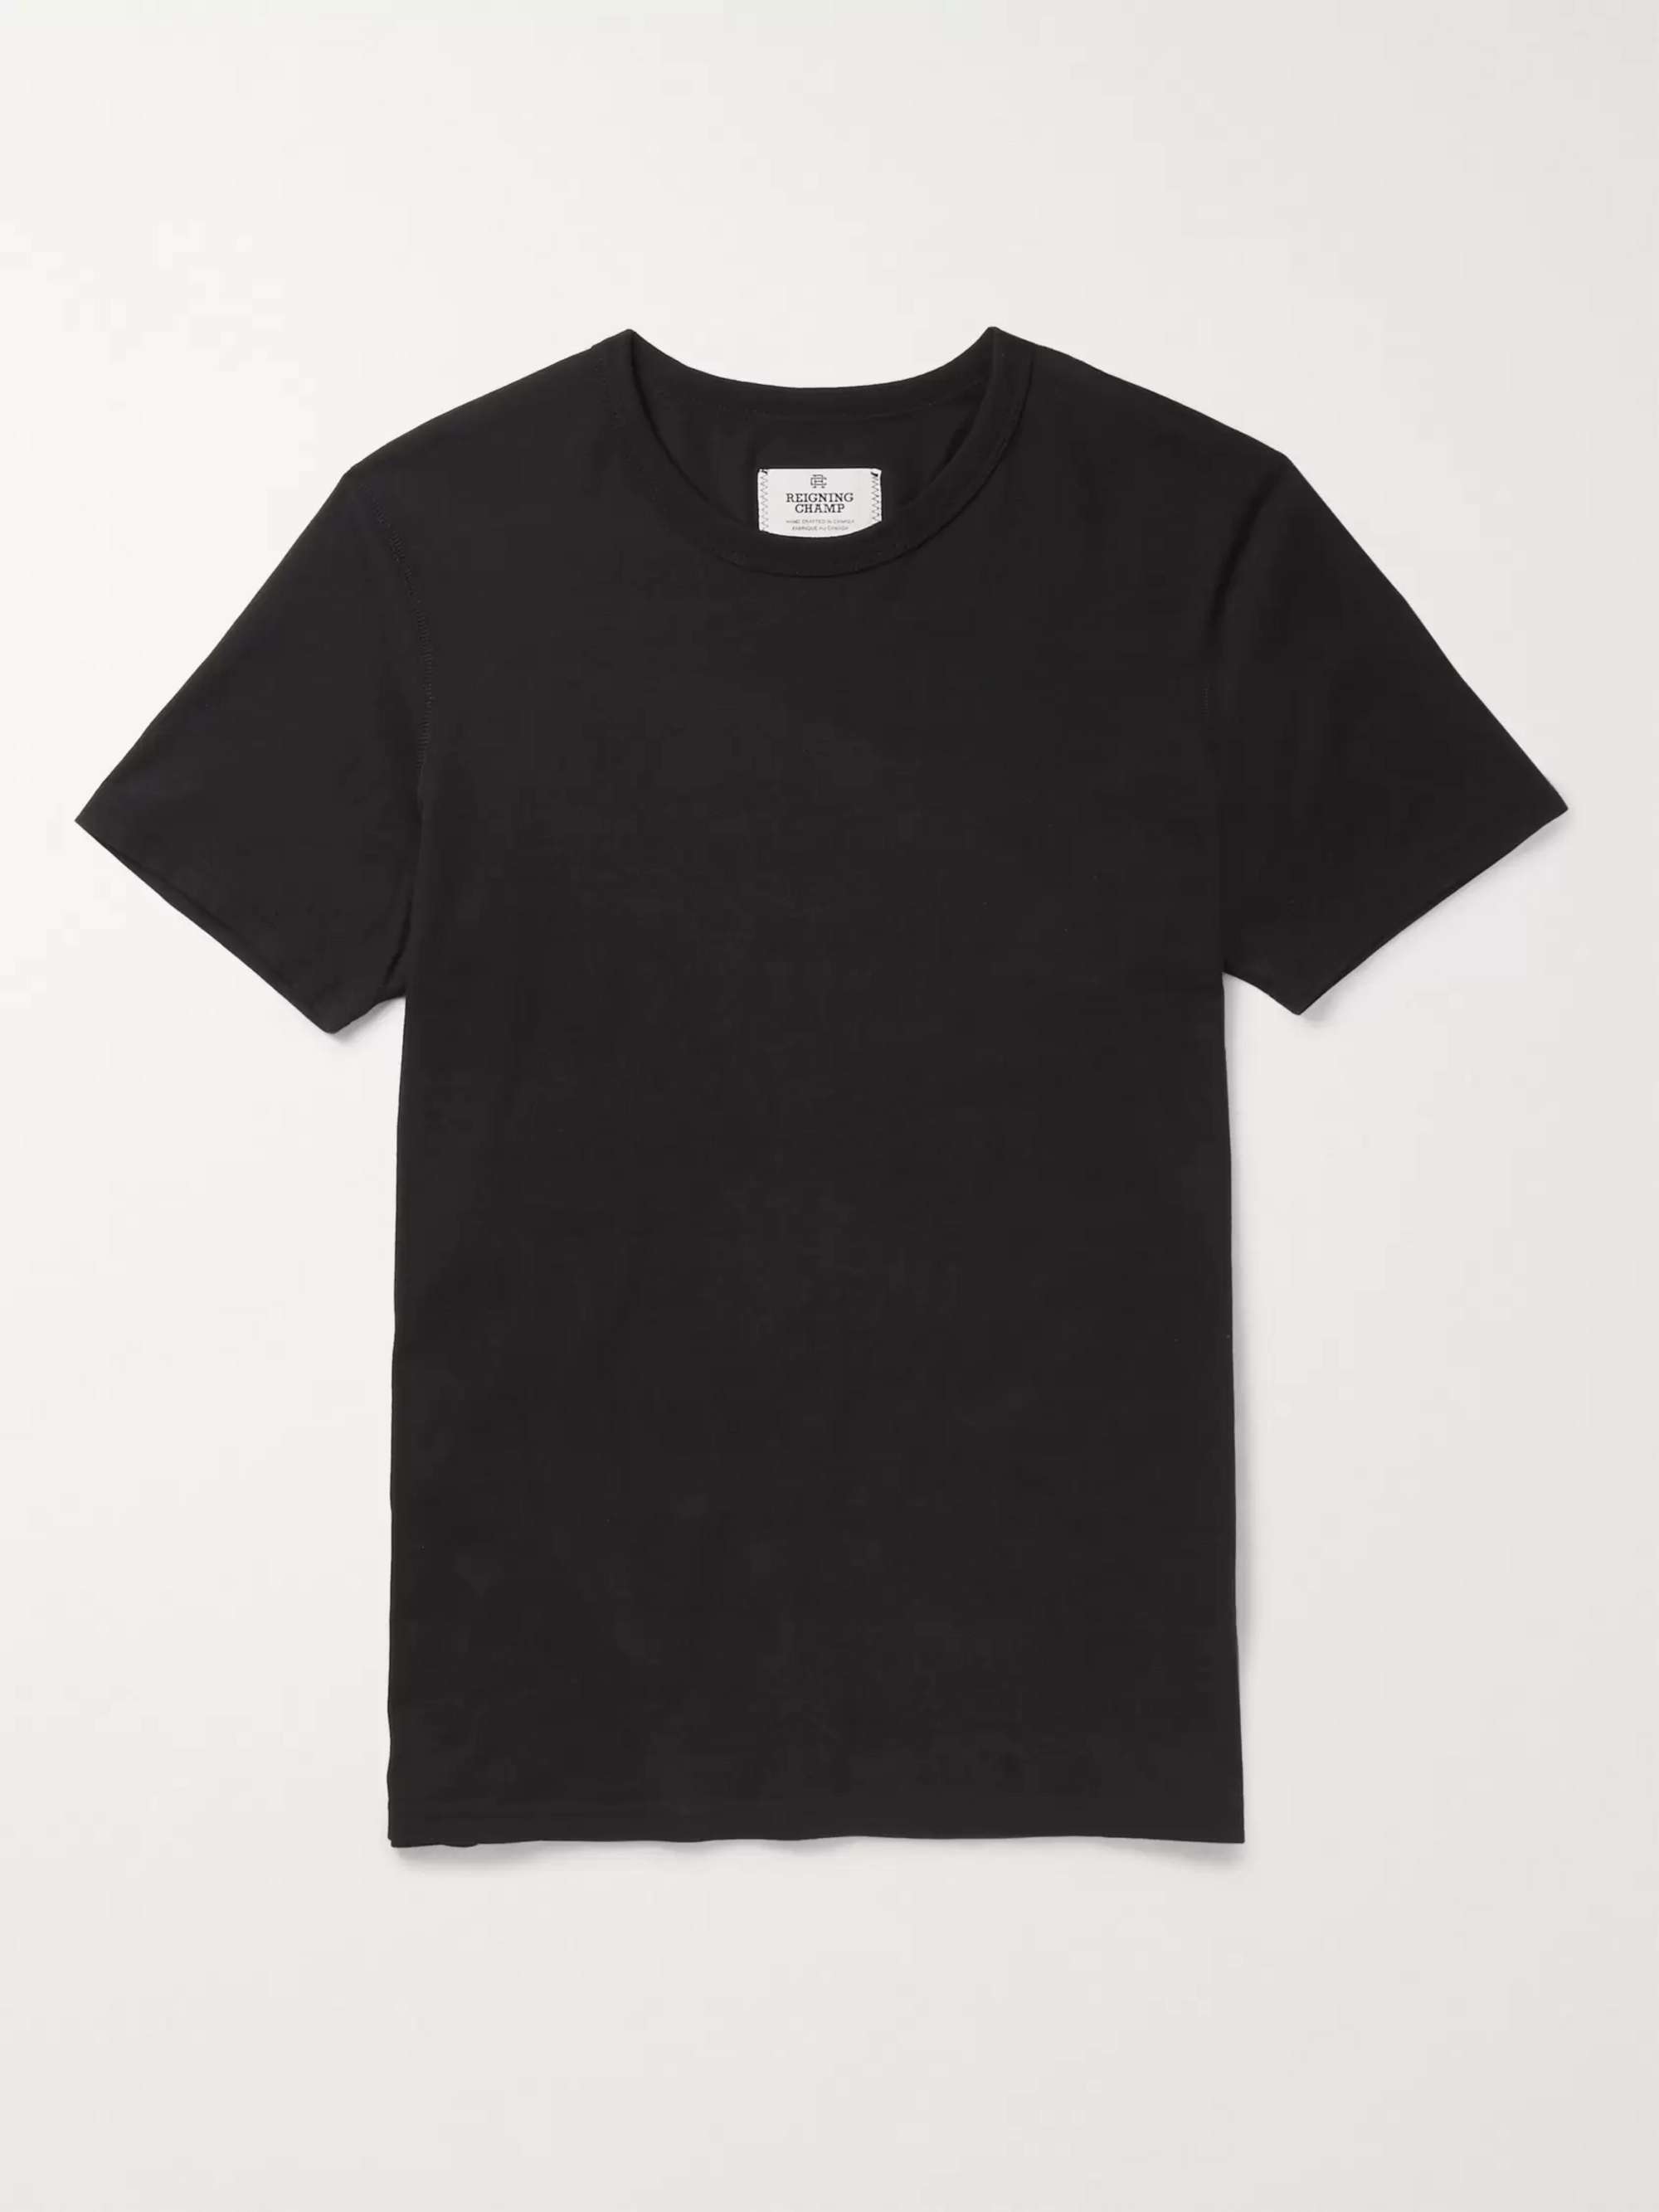 Mens Organic Ringspun Combed Cotton Plain Blank Tee Shirt Tshirt T-Shirt Top